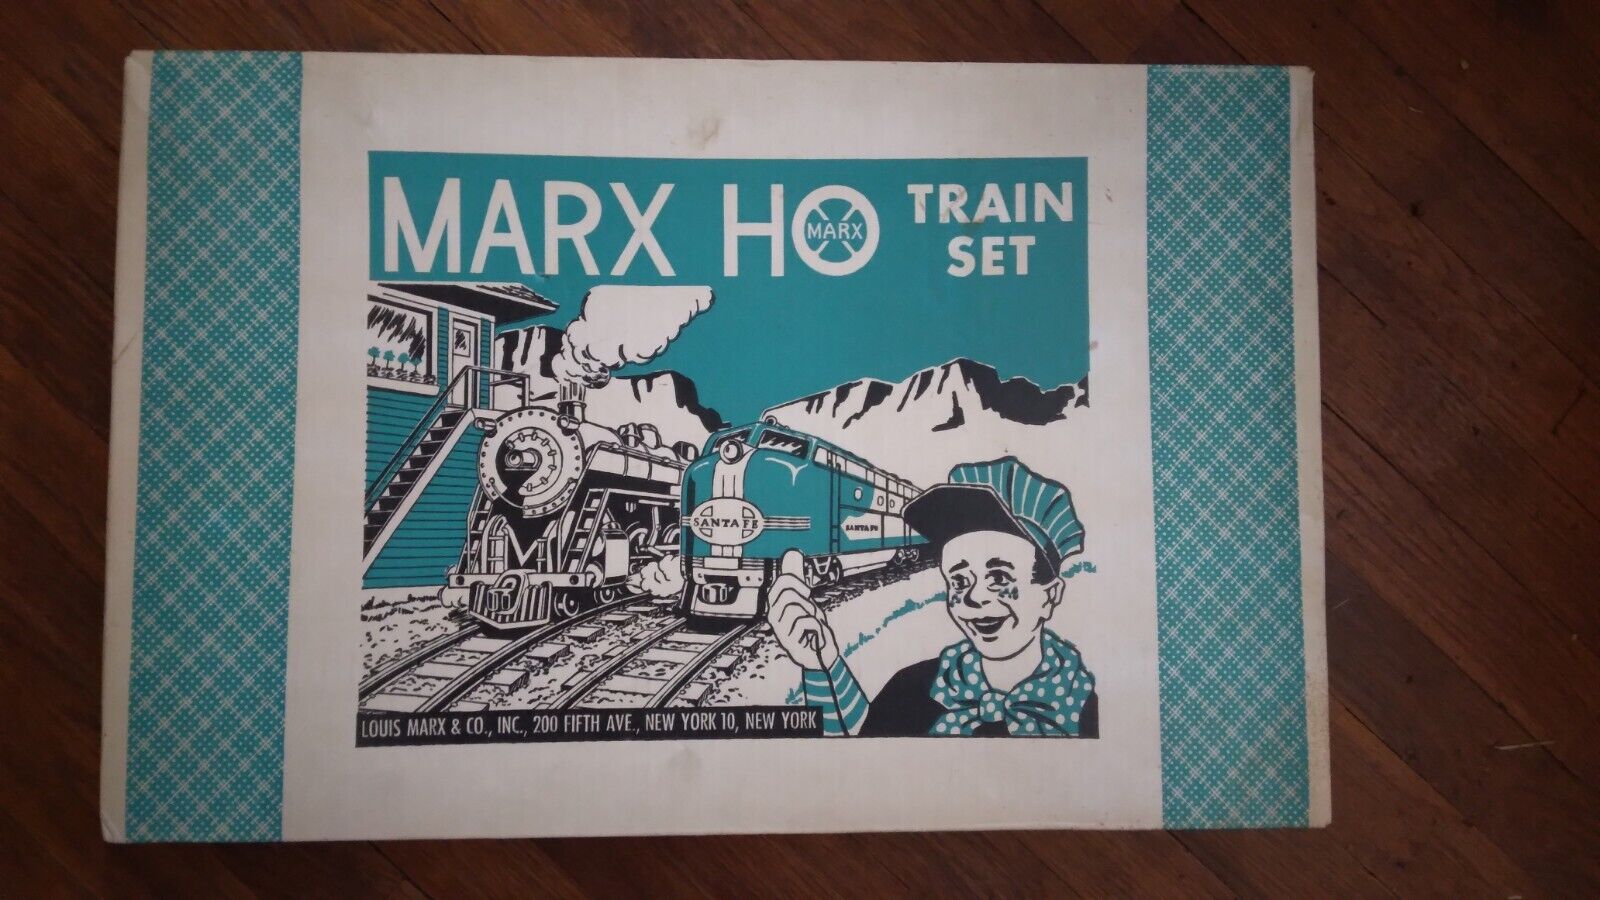  Vintage MARX HO Scale Train 16450 Set with Original Box Rare 1960s